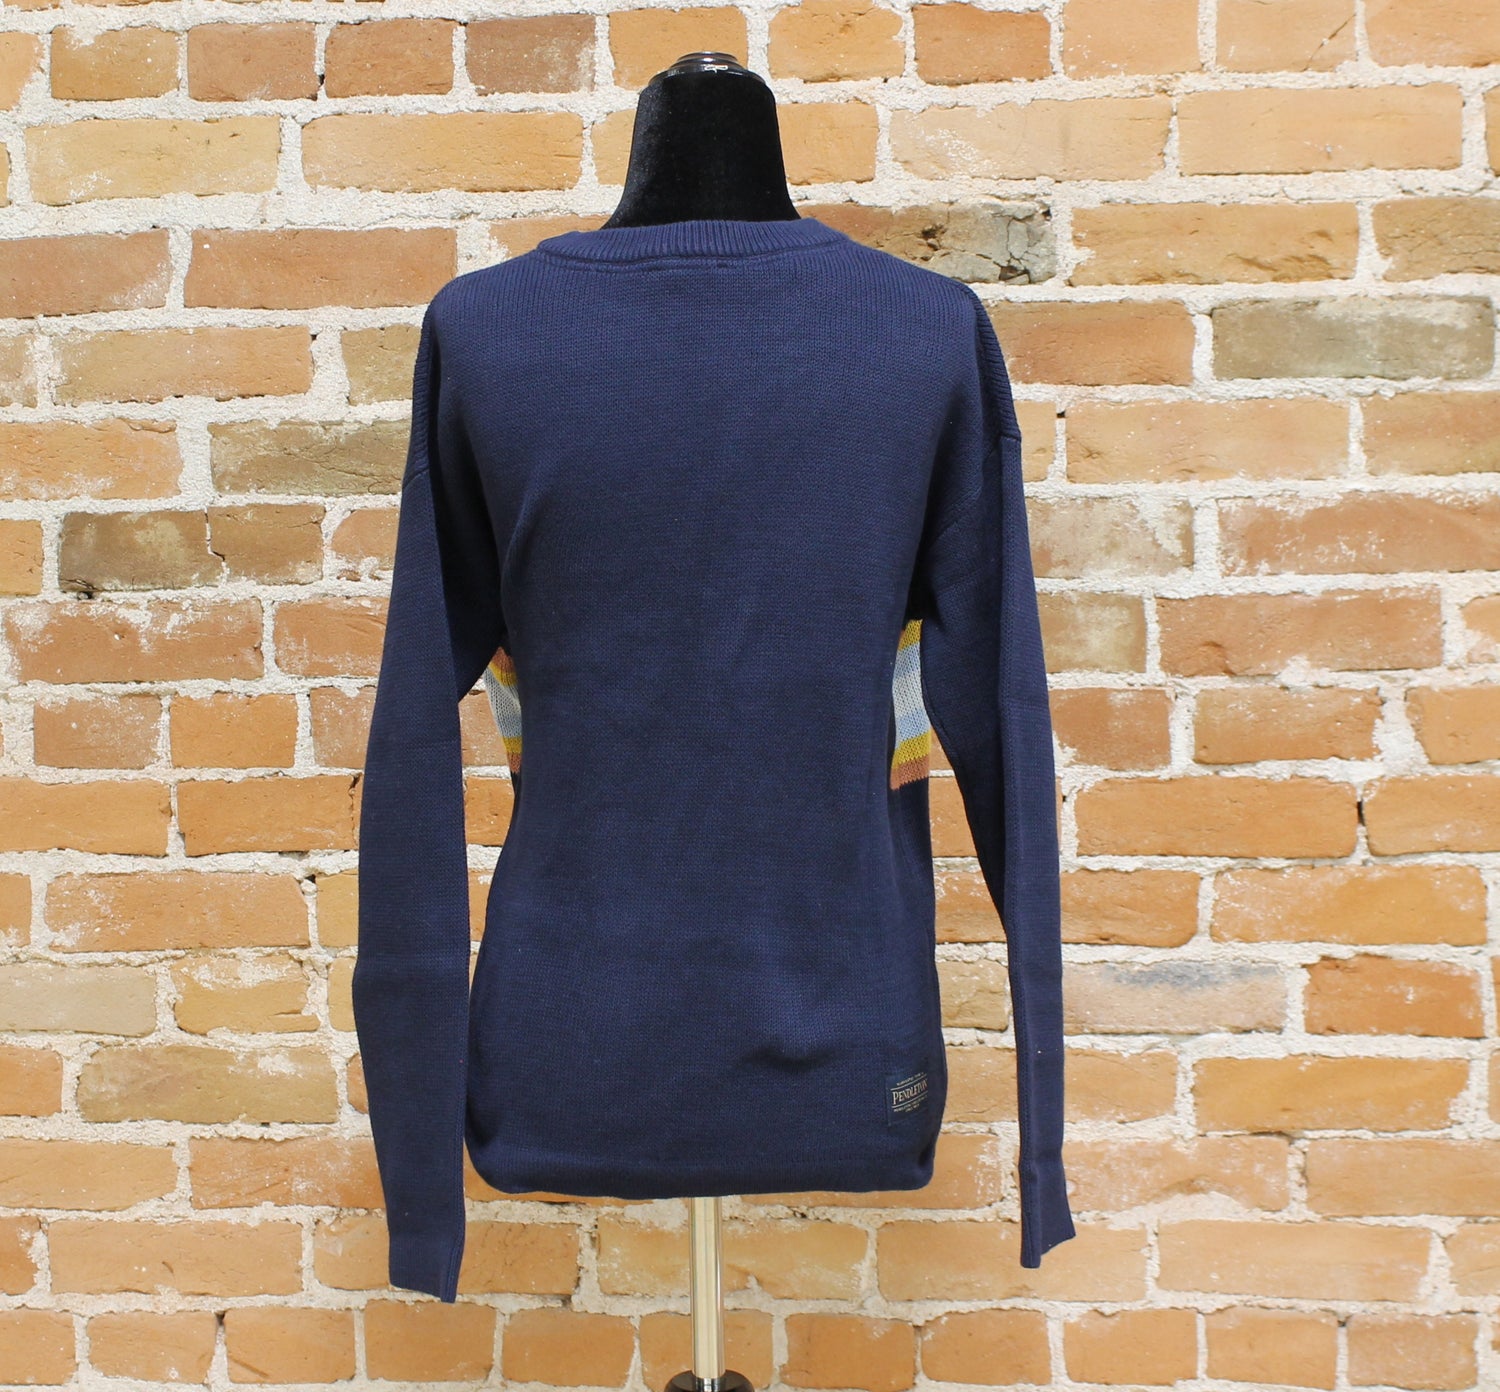 Ladies Pendleton Cotton Graphic Sweater in Dark Blue Harding view of back